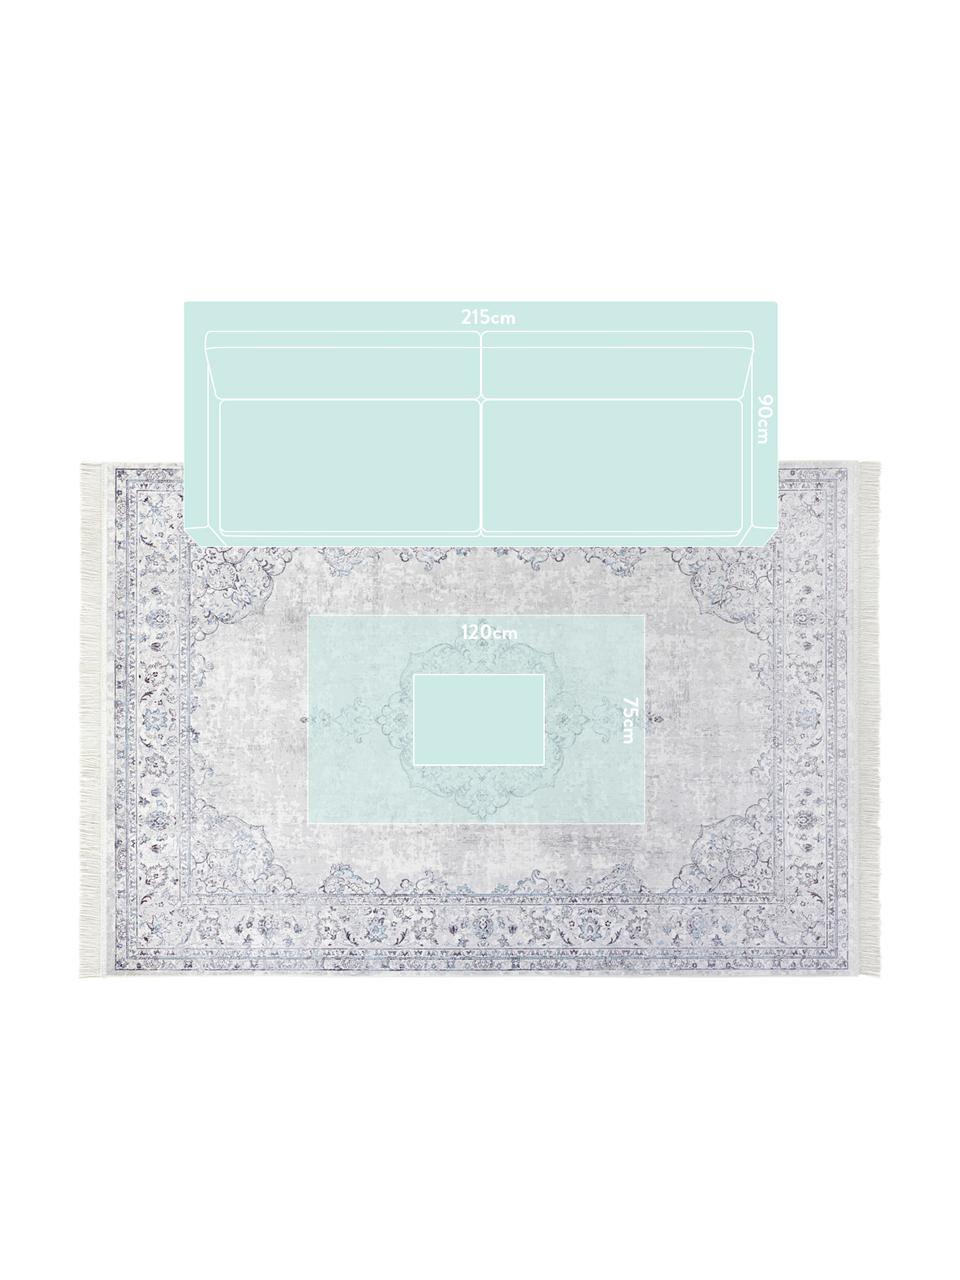 Teppich Medaillon im Vintage Look, Viskose/Baumwolle, 60% Viskose, 40% Baumwolle, Pastellblau, Hellgrau, B 195 x L 300 cm (Größe L)